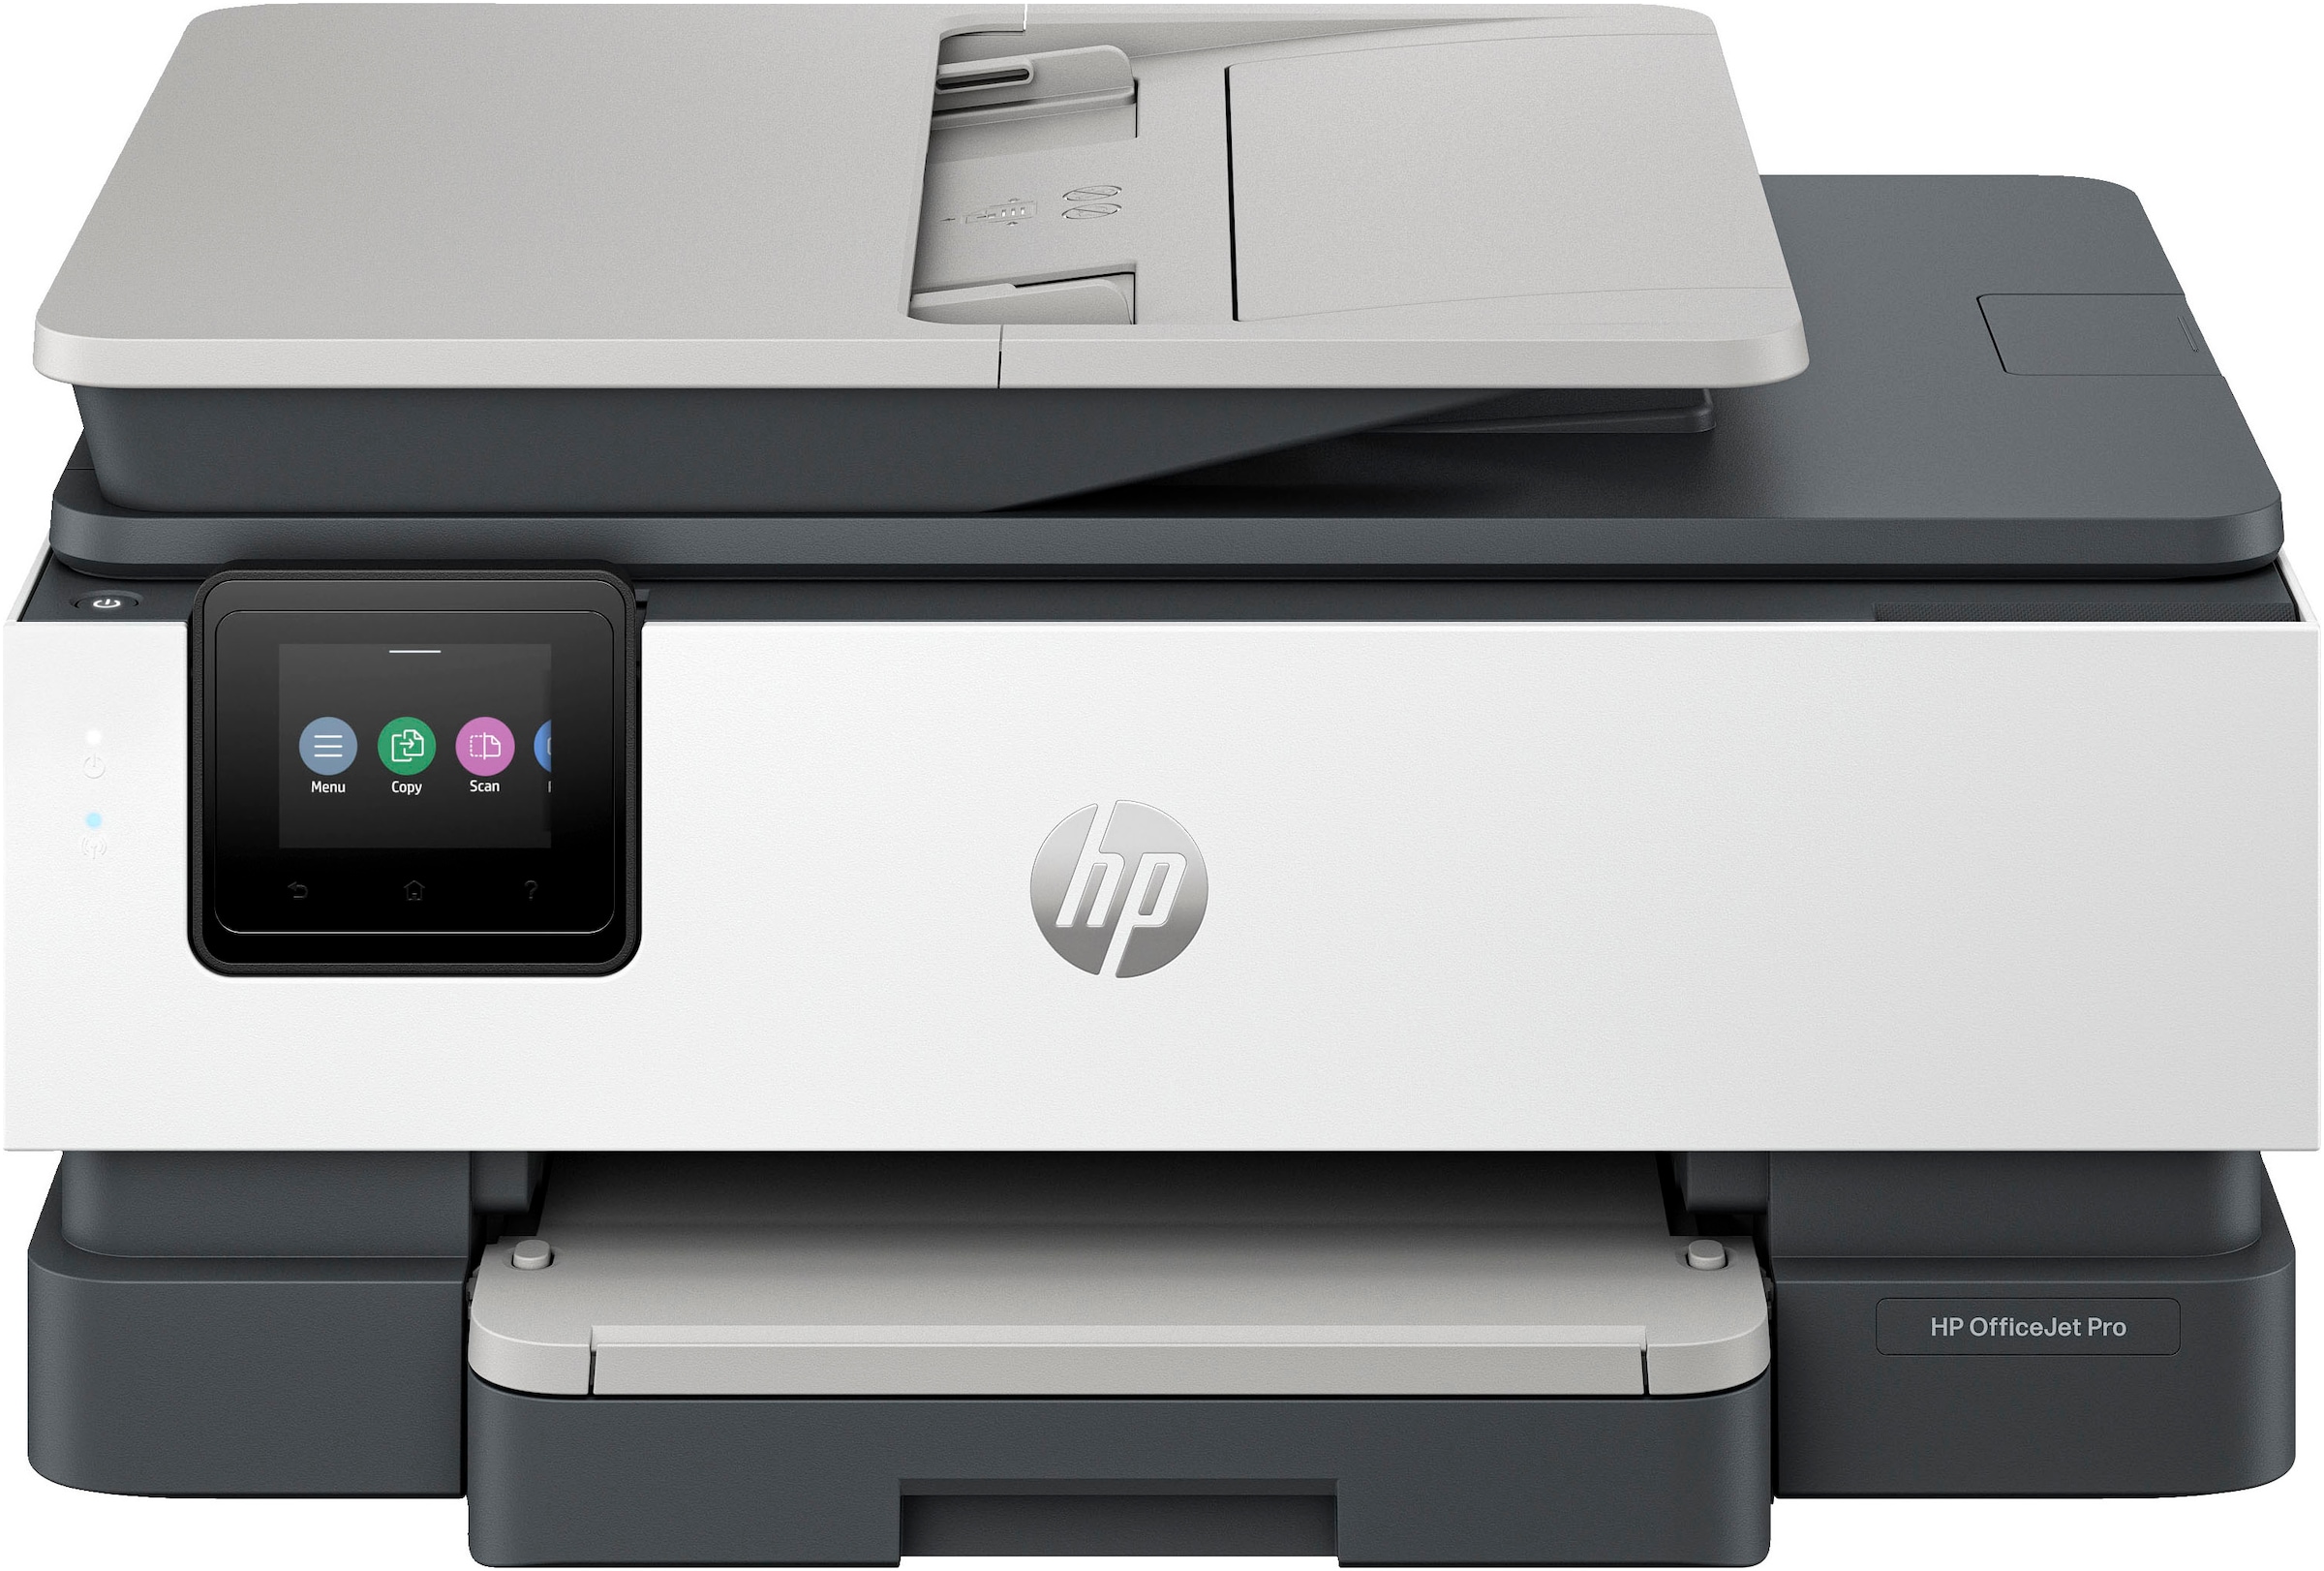 HP Multifunktionsdrucker »OfficeJet Pro 8132e«, 3 Monate gratis Drucken mit HP Instant Ink inklusive